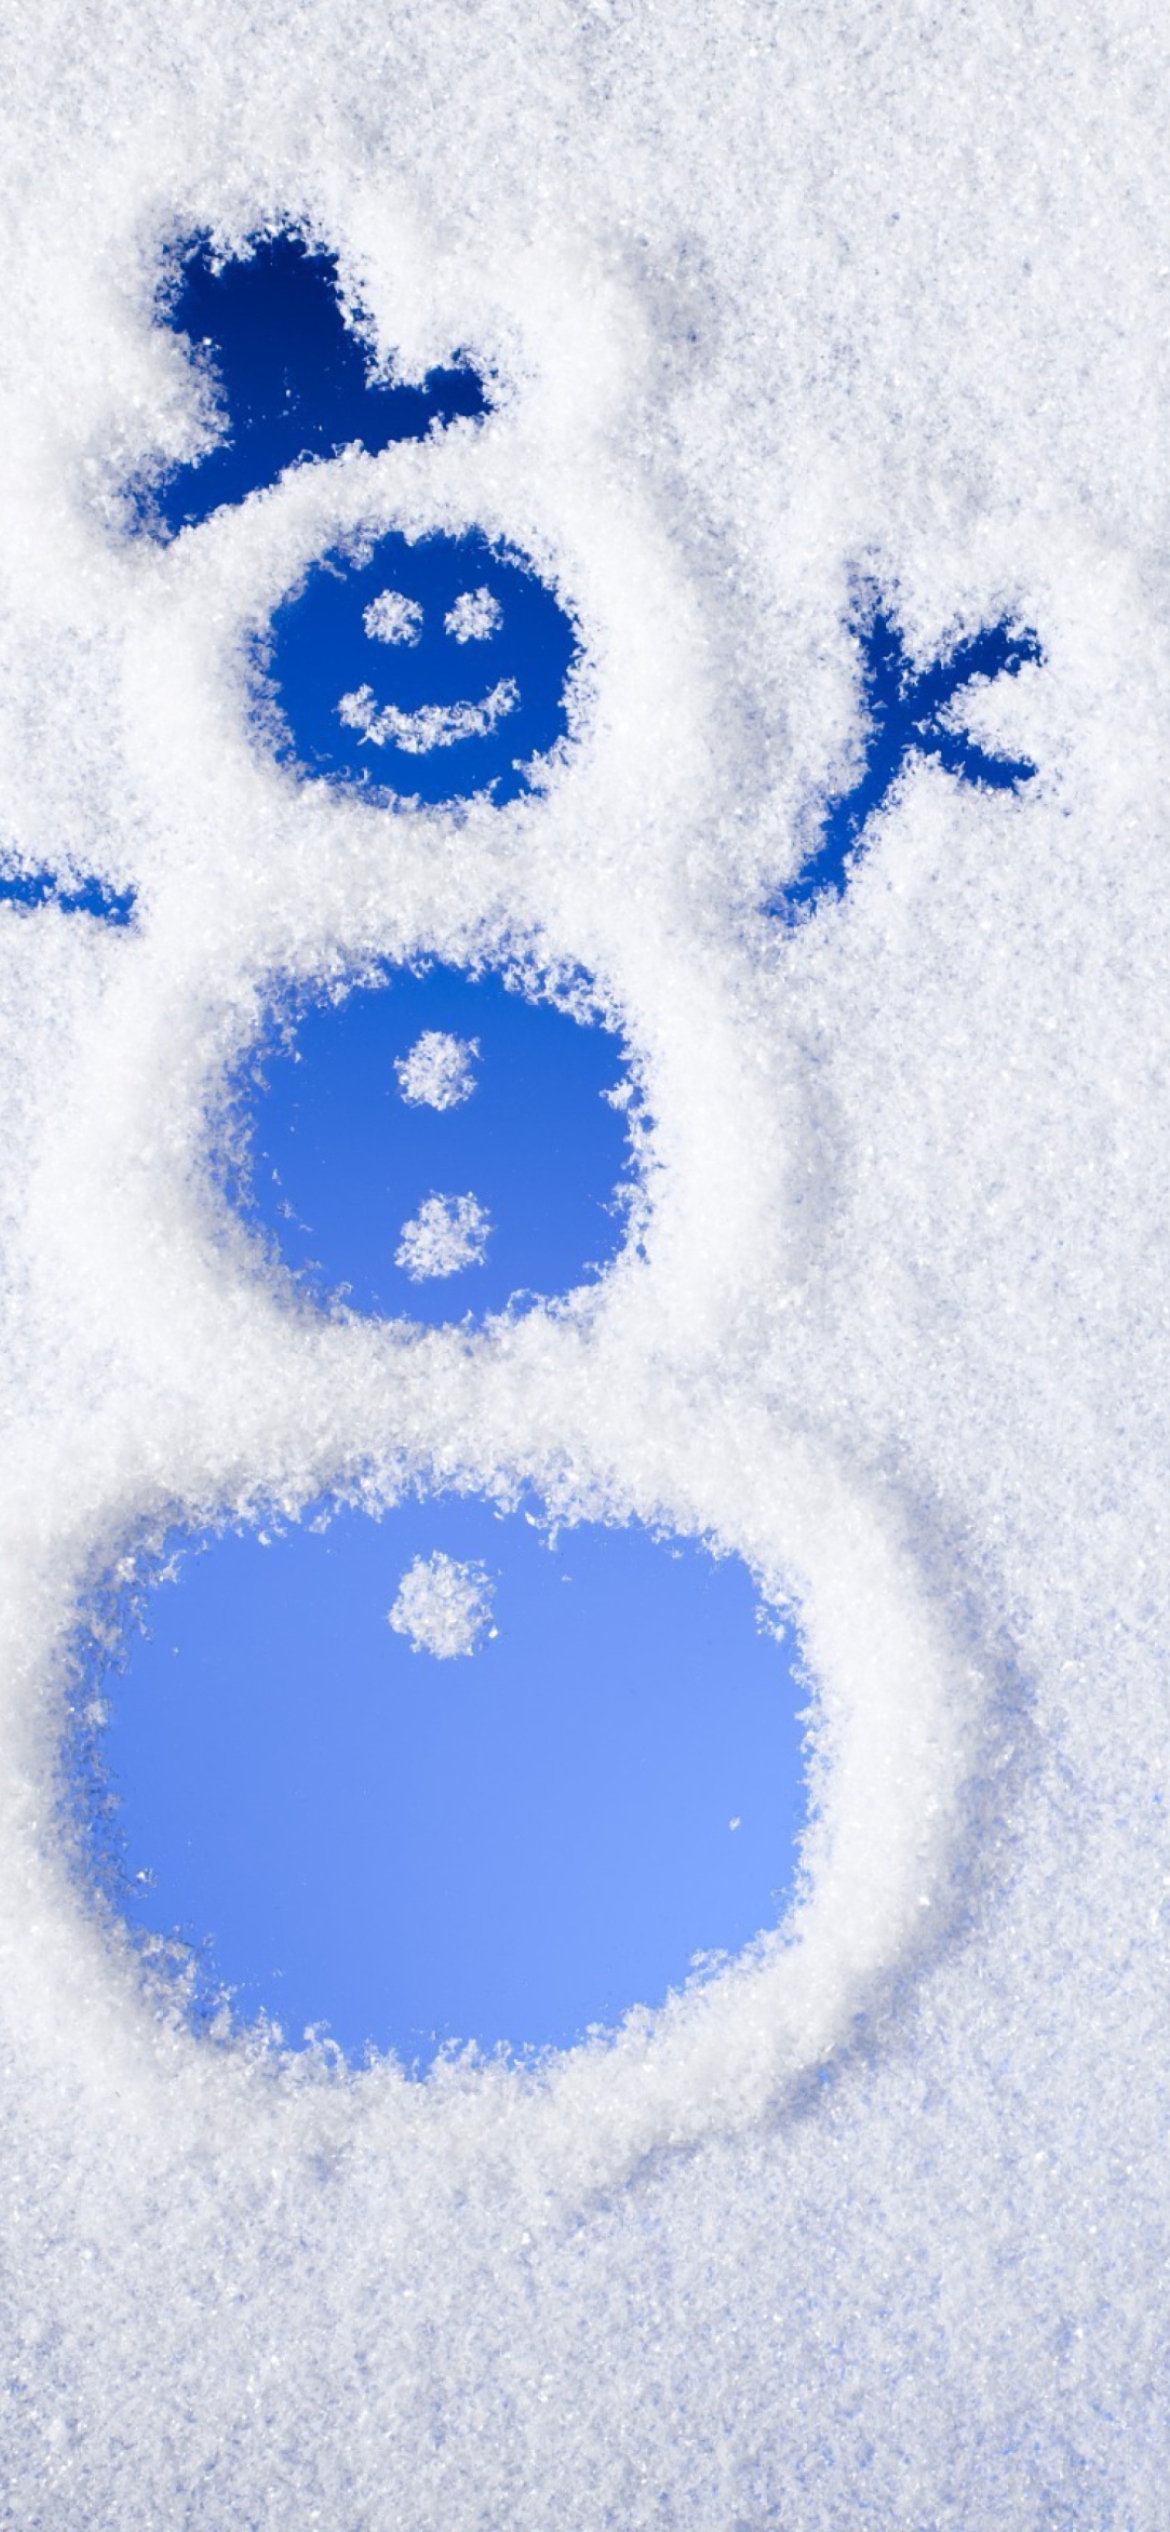 Winter, Snow And Snowman wallpaper 1170x2532